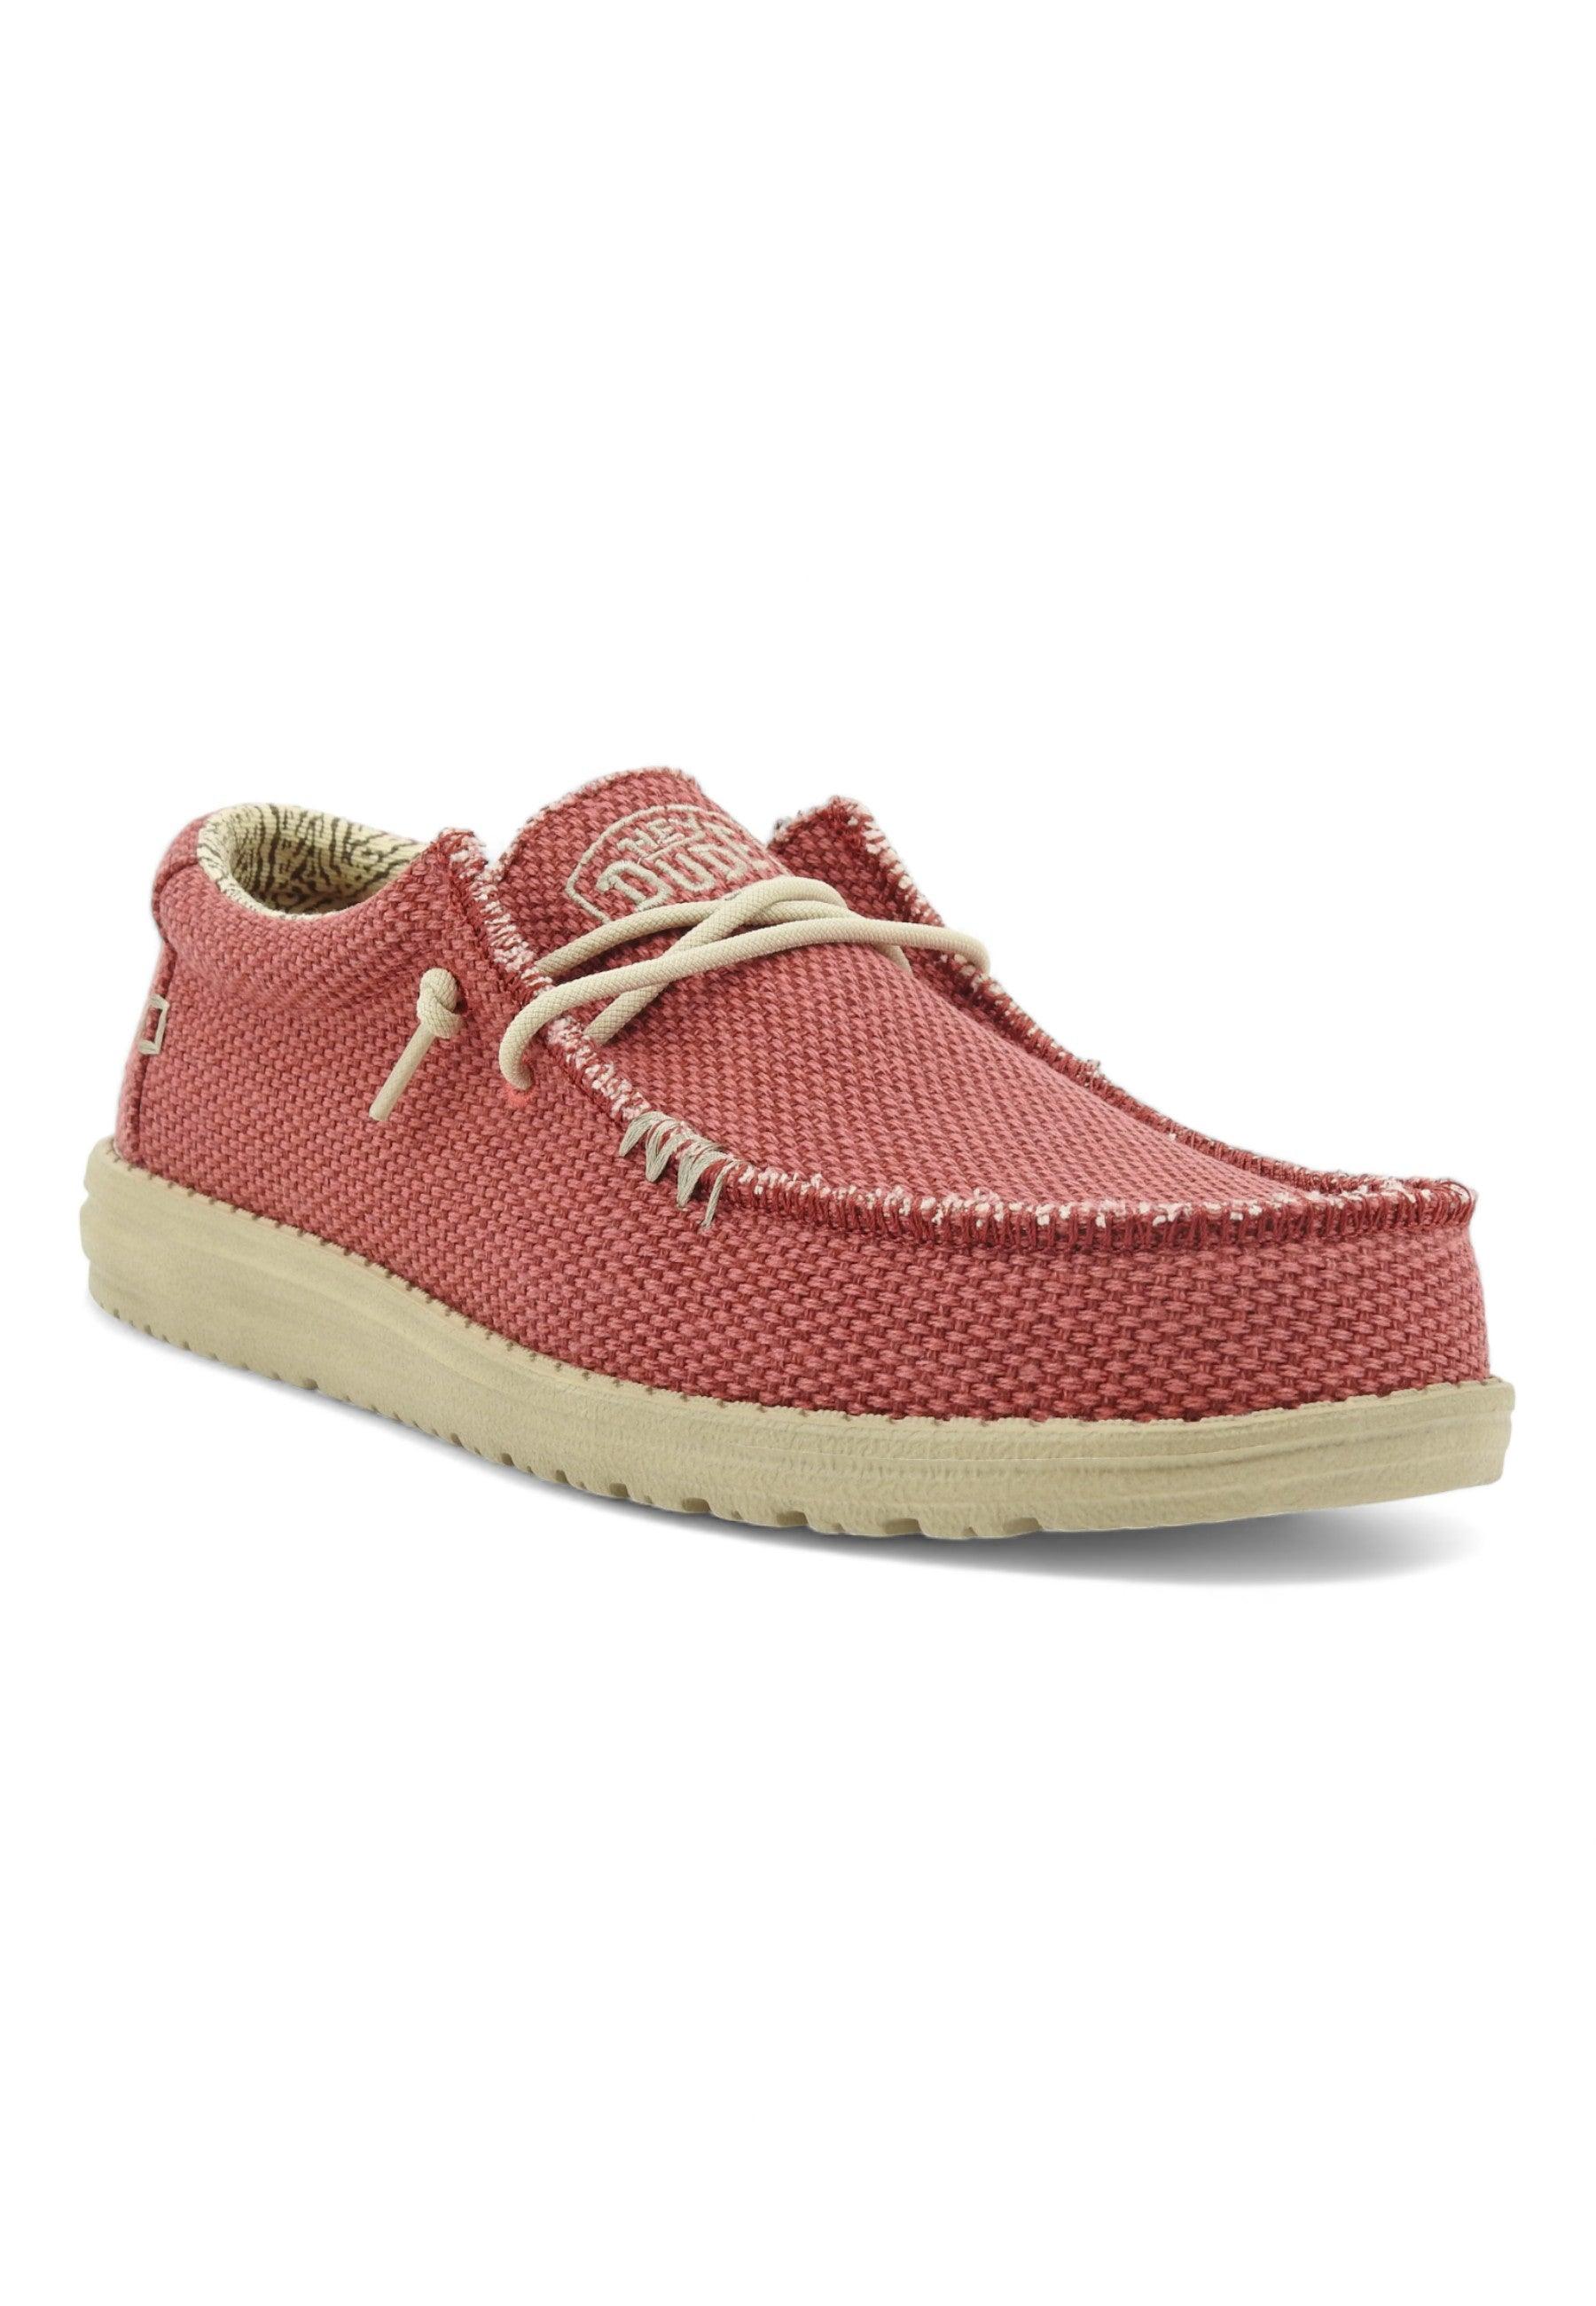 HEY DUDE Wally Braided Sneaker Vela Uomo Pompeian Red 40003-6VP - Sandrini Calzature e Abbigliamento